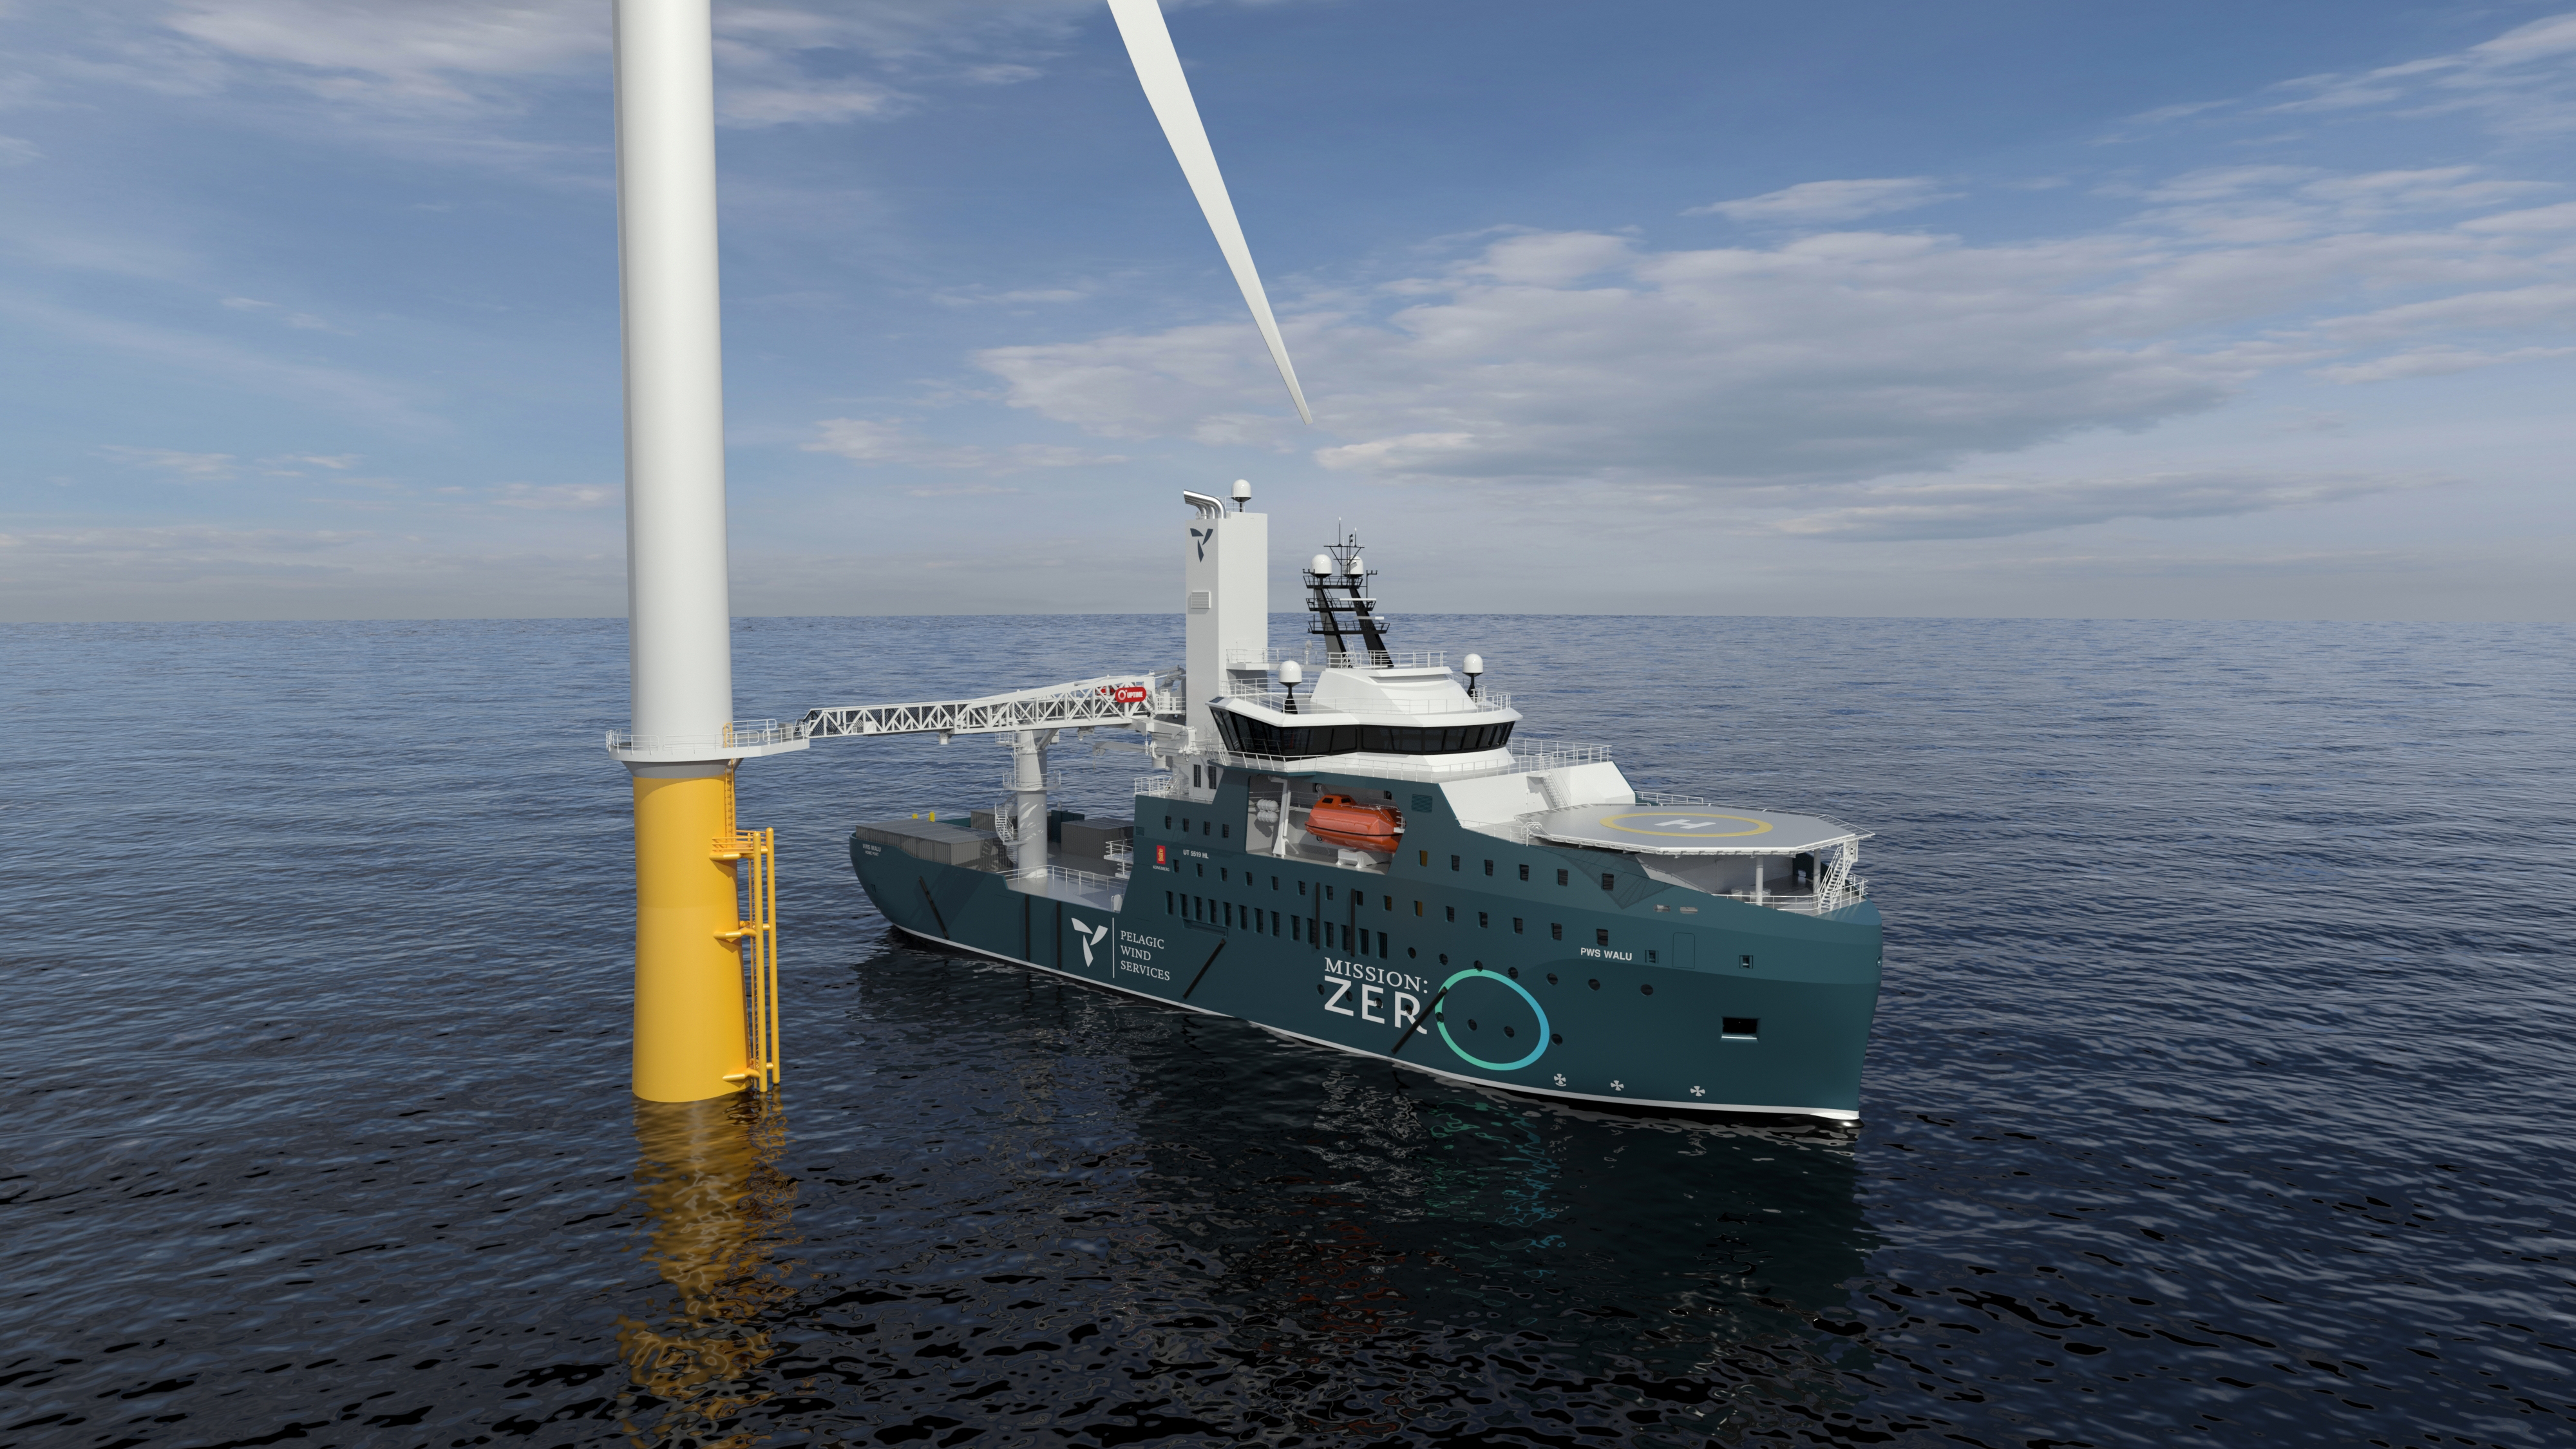 2 Kongsberg Maritime wins NOK 300 million contract for new CSOVâ s for Pelagic Wind Services 4